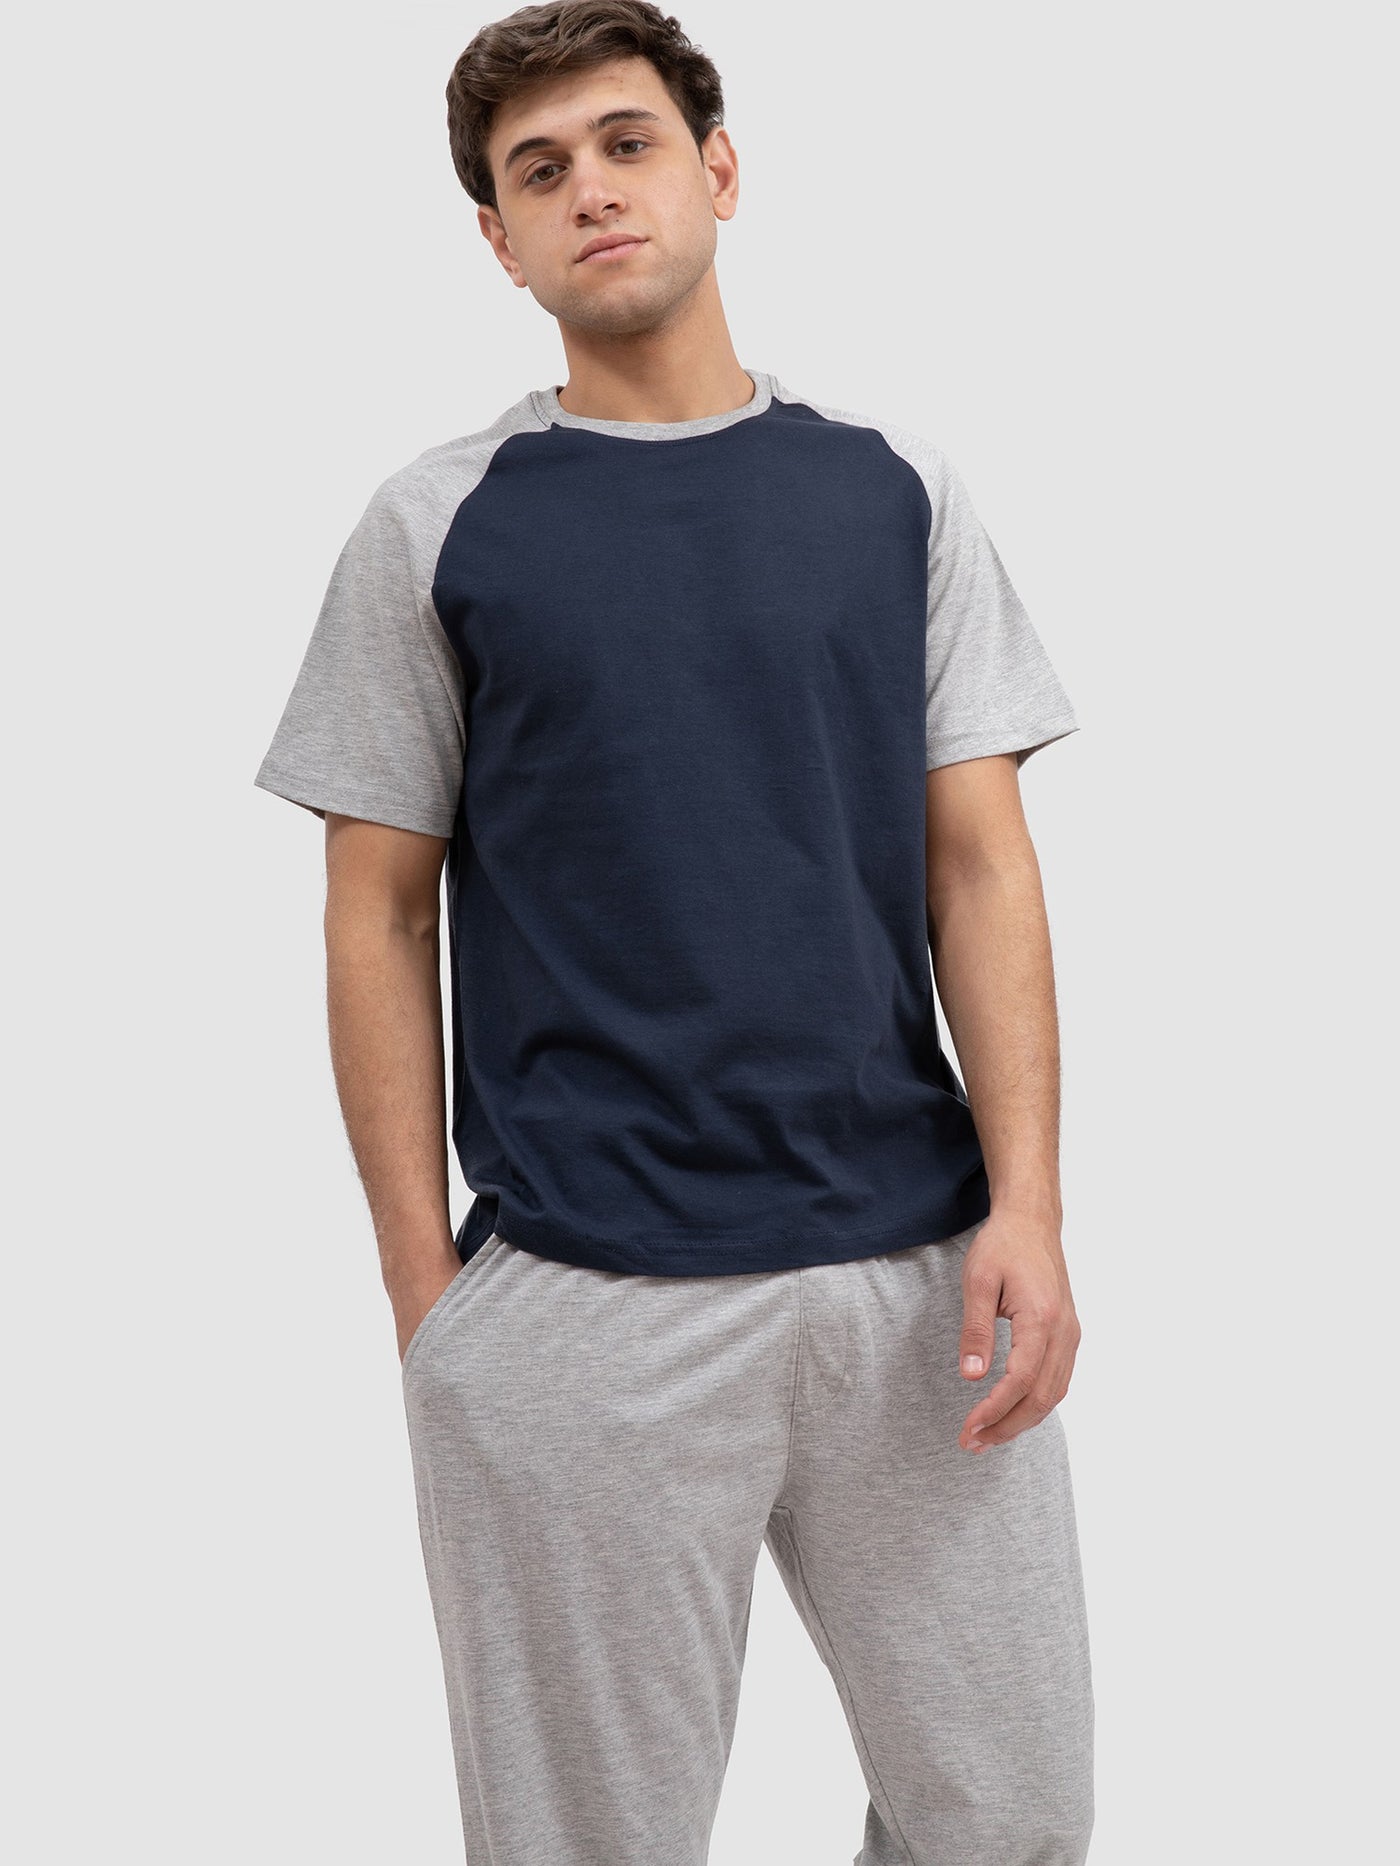 Premoda Mens 2-Piece Pajama Set